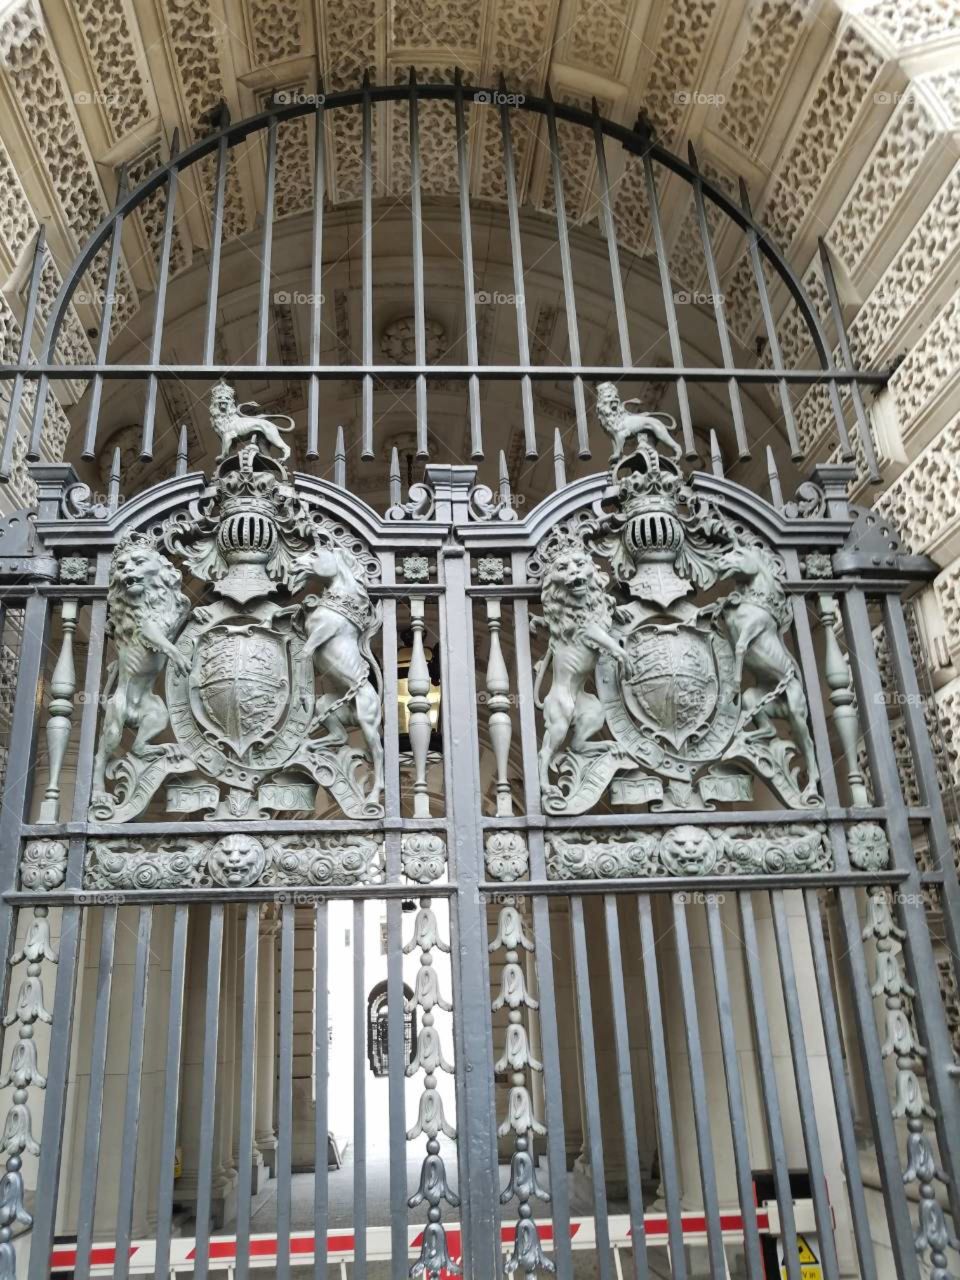 Architecture, Door, Gate, Entrance, Ornate